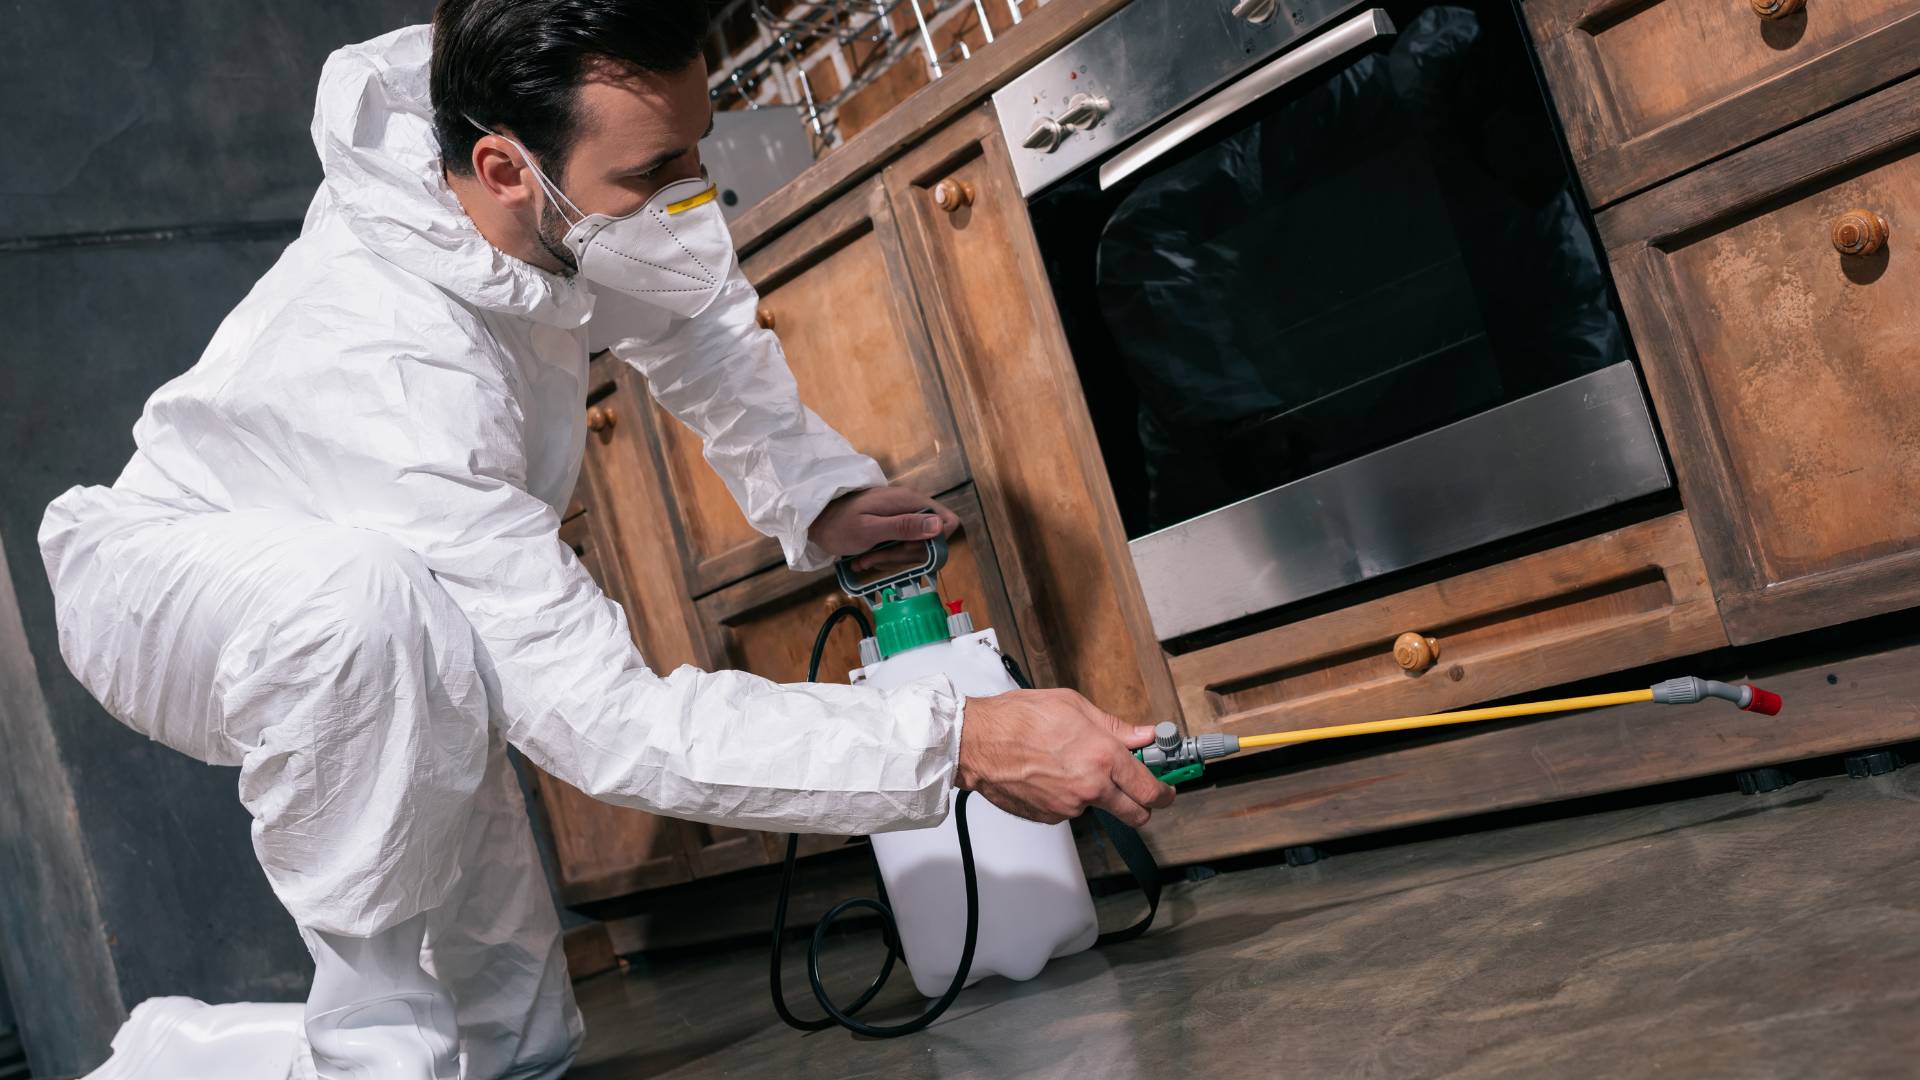 pest control expert servicing a commercial kitchen